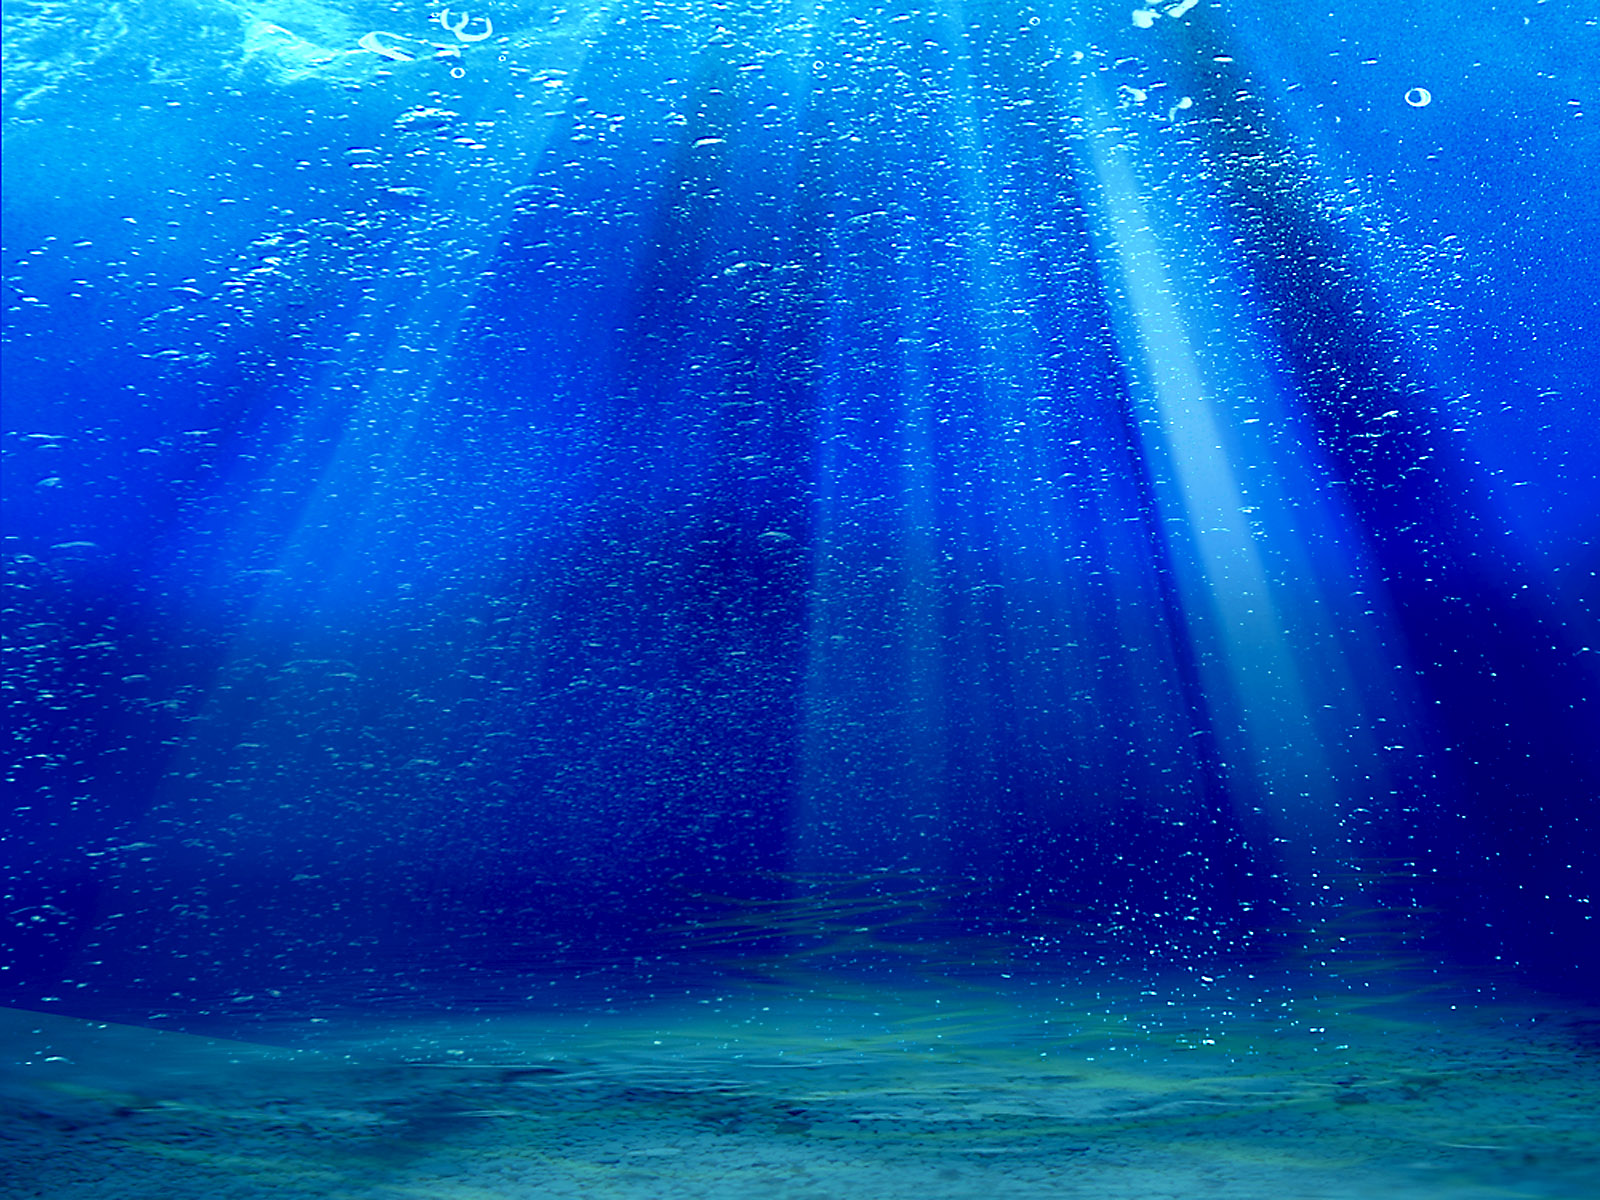 Deep Blue Sea By Mudukrull Jpg